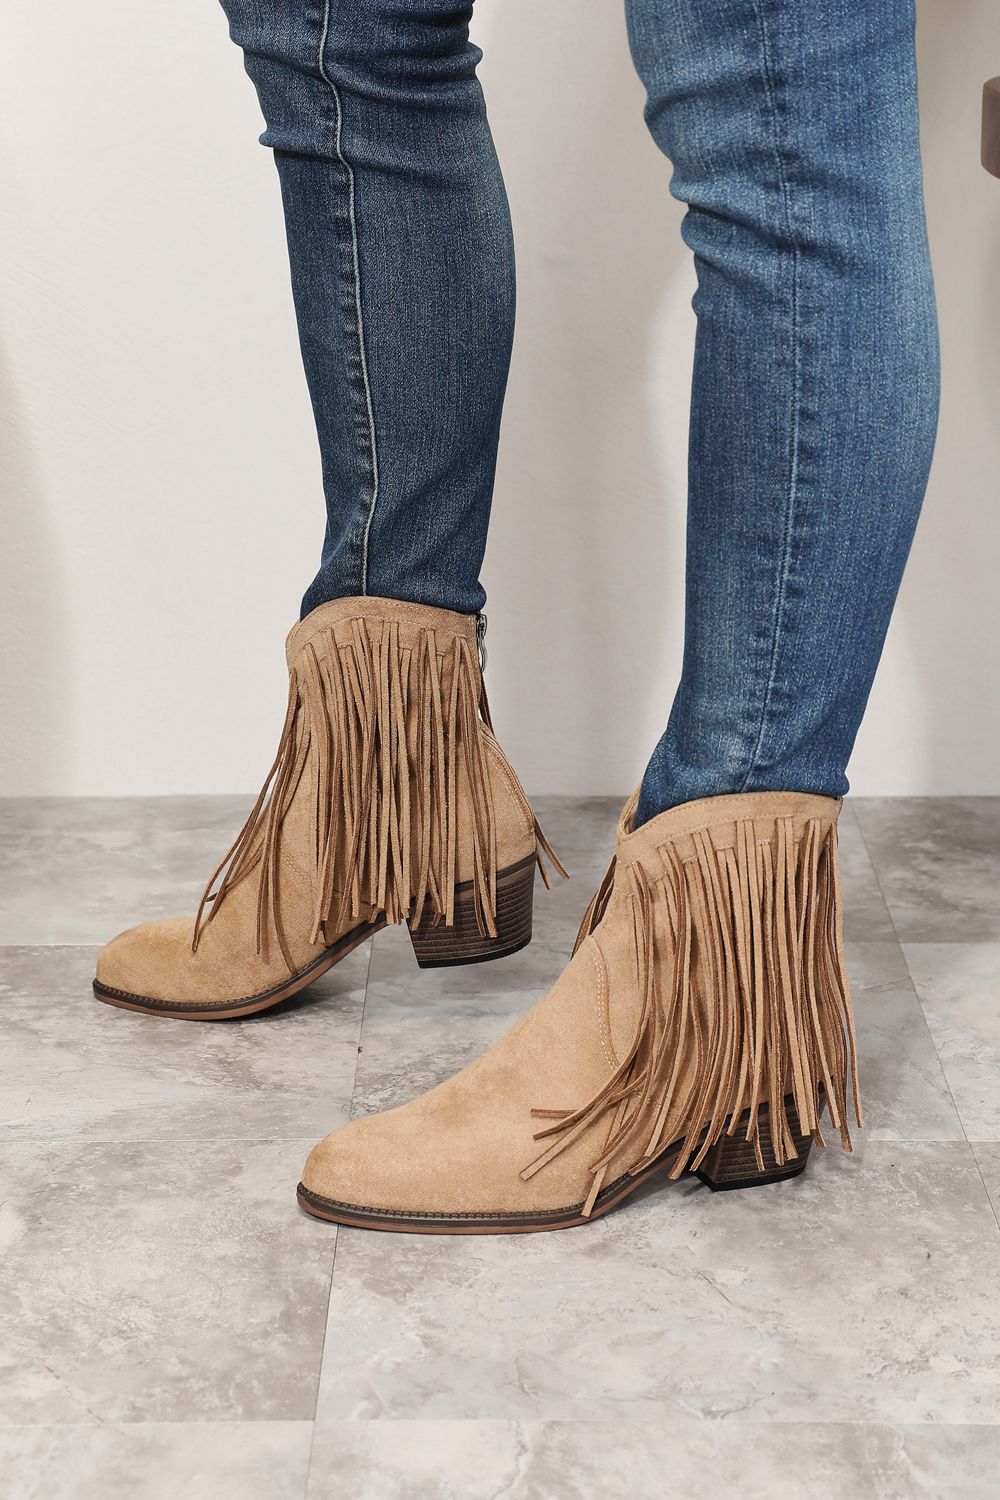 Women's Fringe Cowgirl Western Vegan Suede Ankle BootsBootiesWILD DIVA